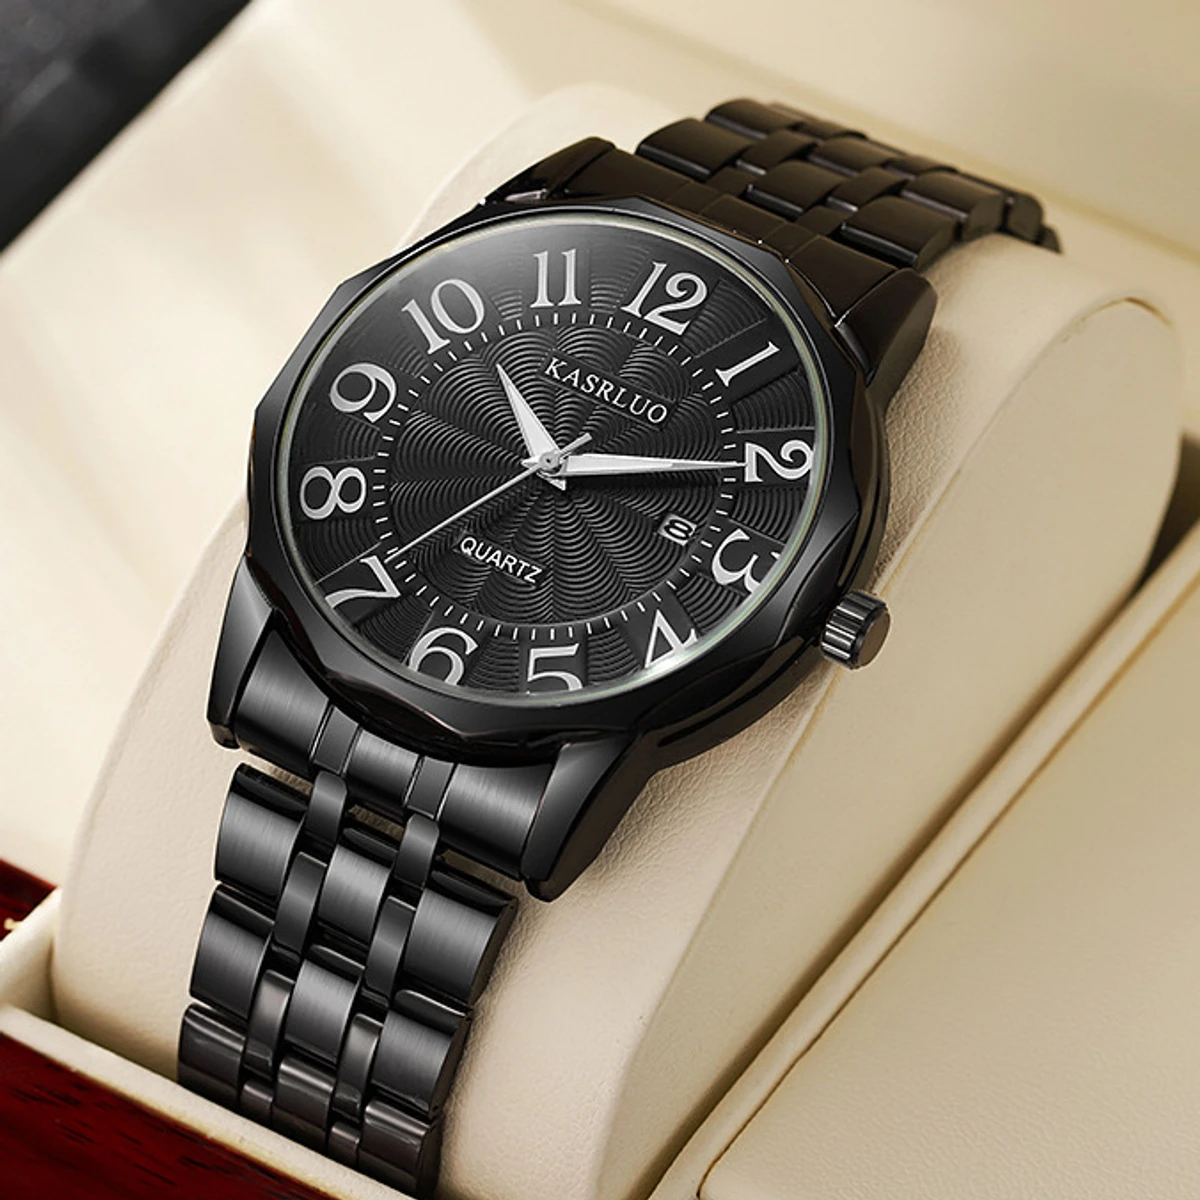 KASRLUO Popular New Fashion Quartz Watch for Men Stainless Steel Waterproof Luminous Date Mens Watches Top Brand Luxury Clock- Black